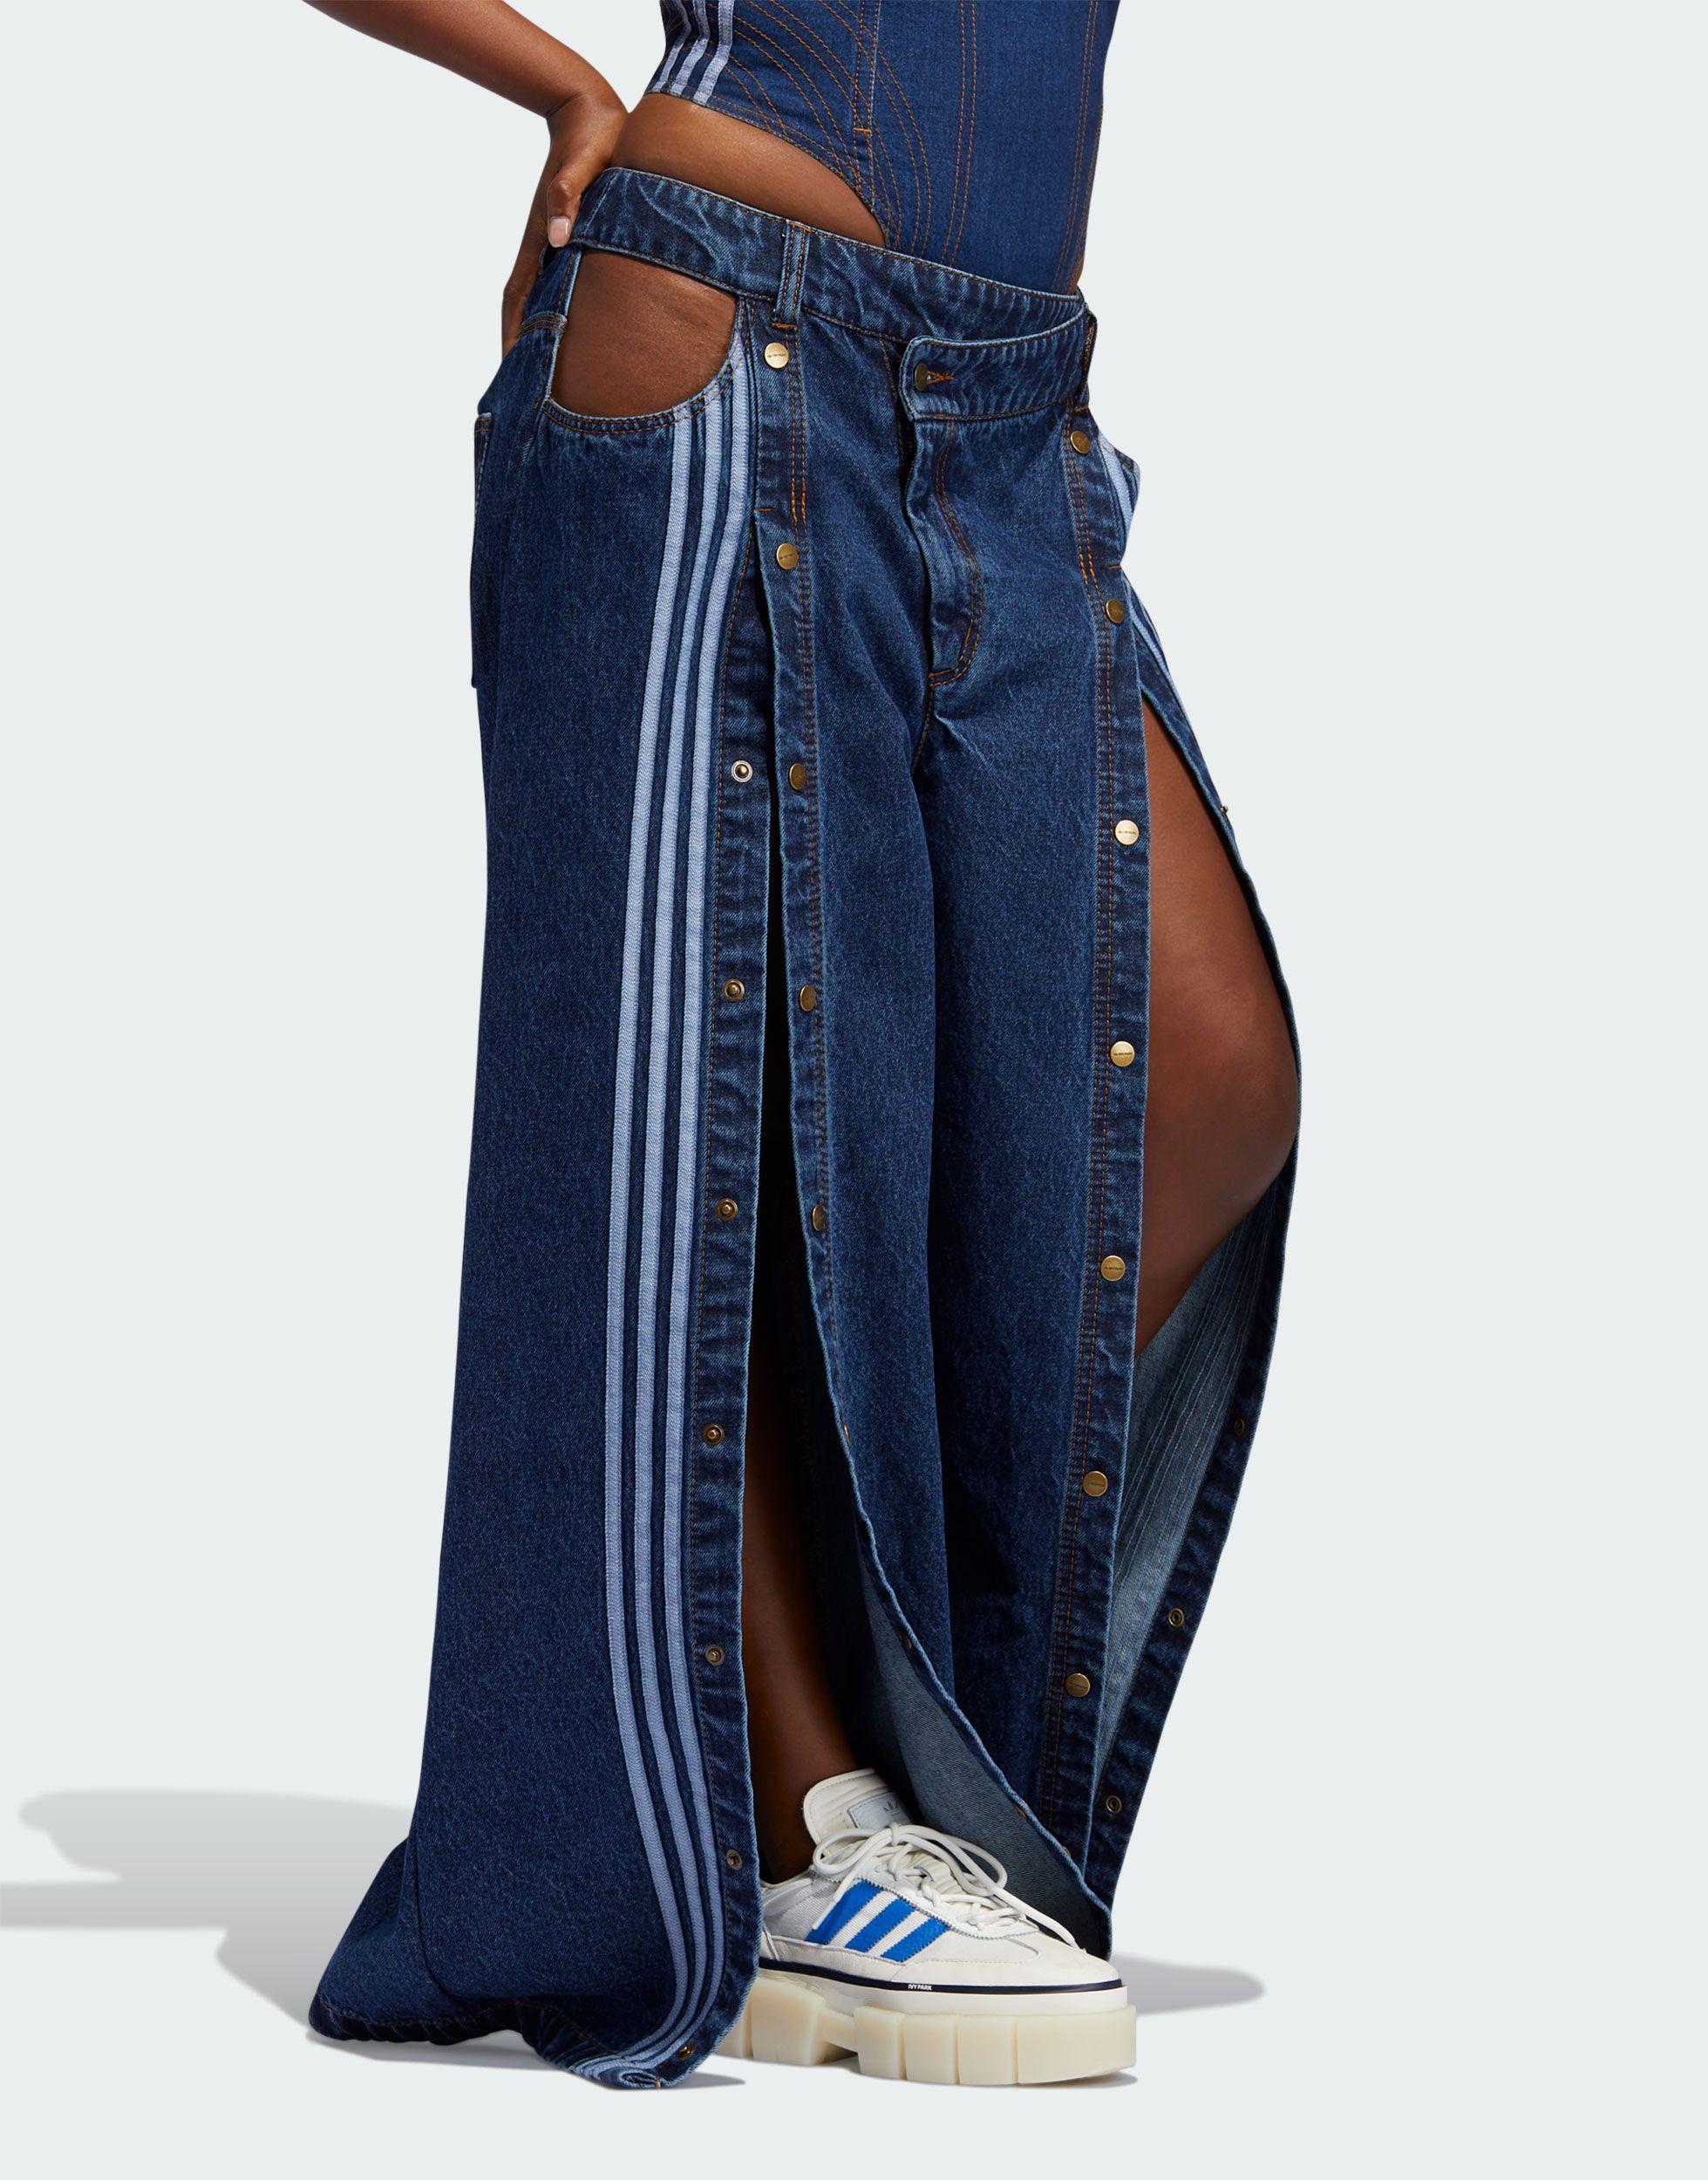 Ivy Park Adidas Originals X Denim Popper Jeans in Blue | Lyst